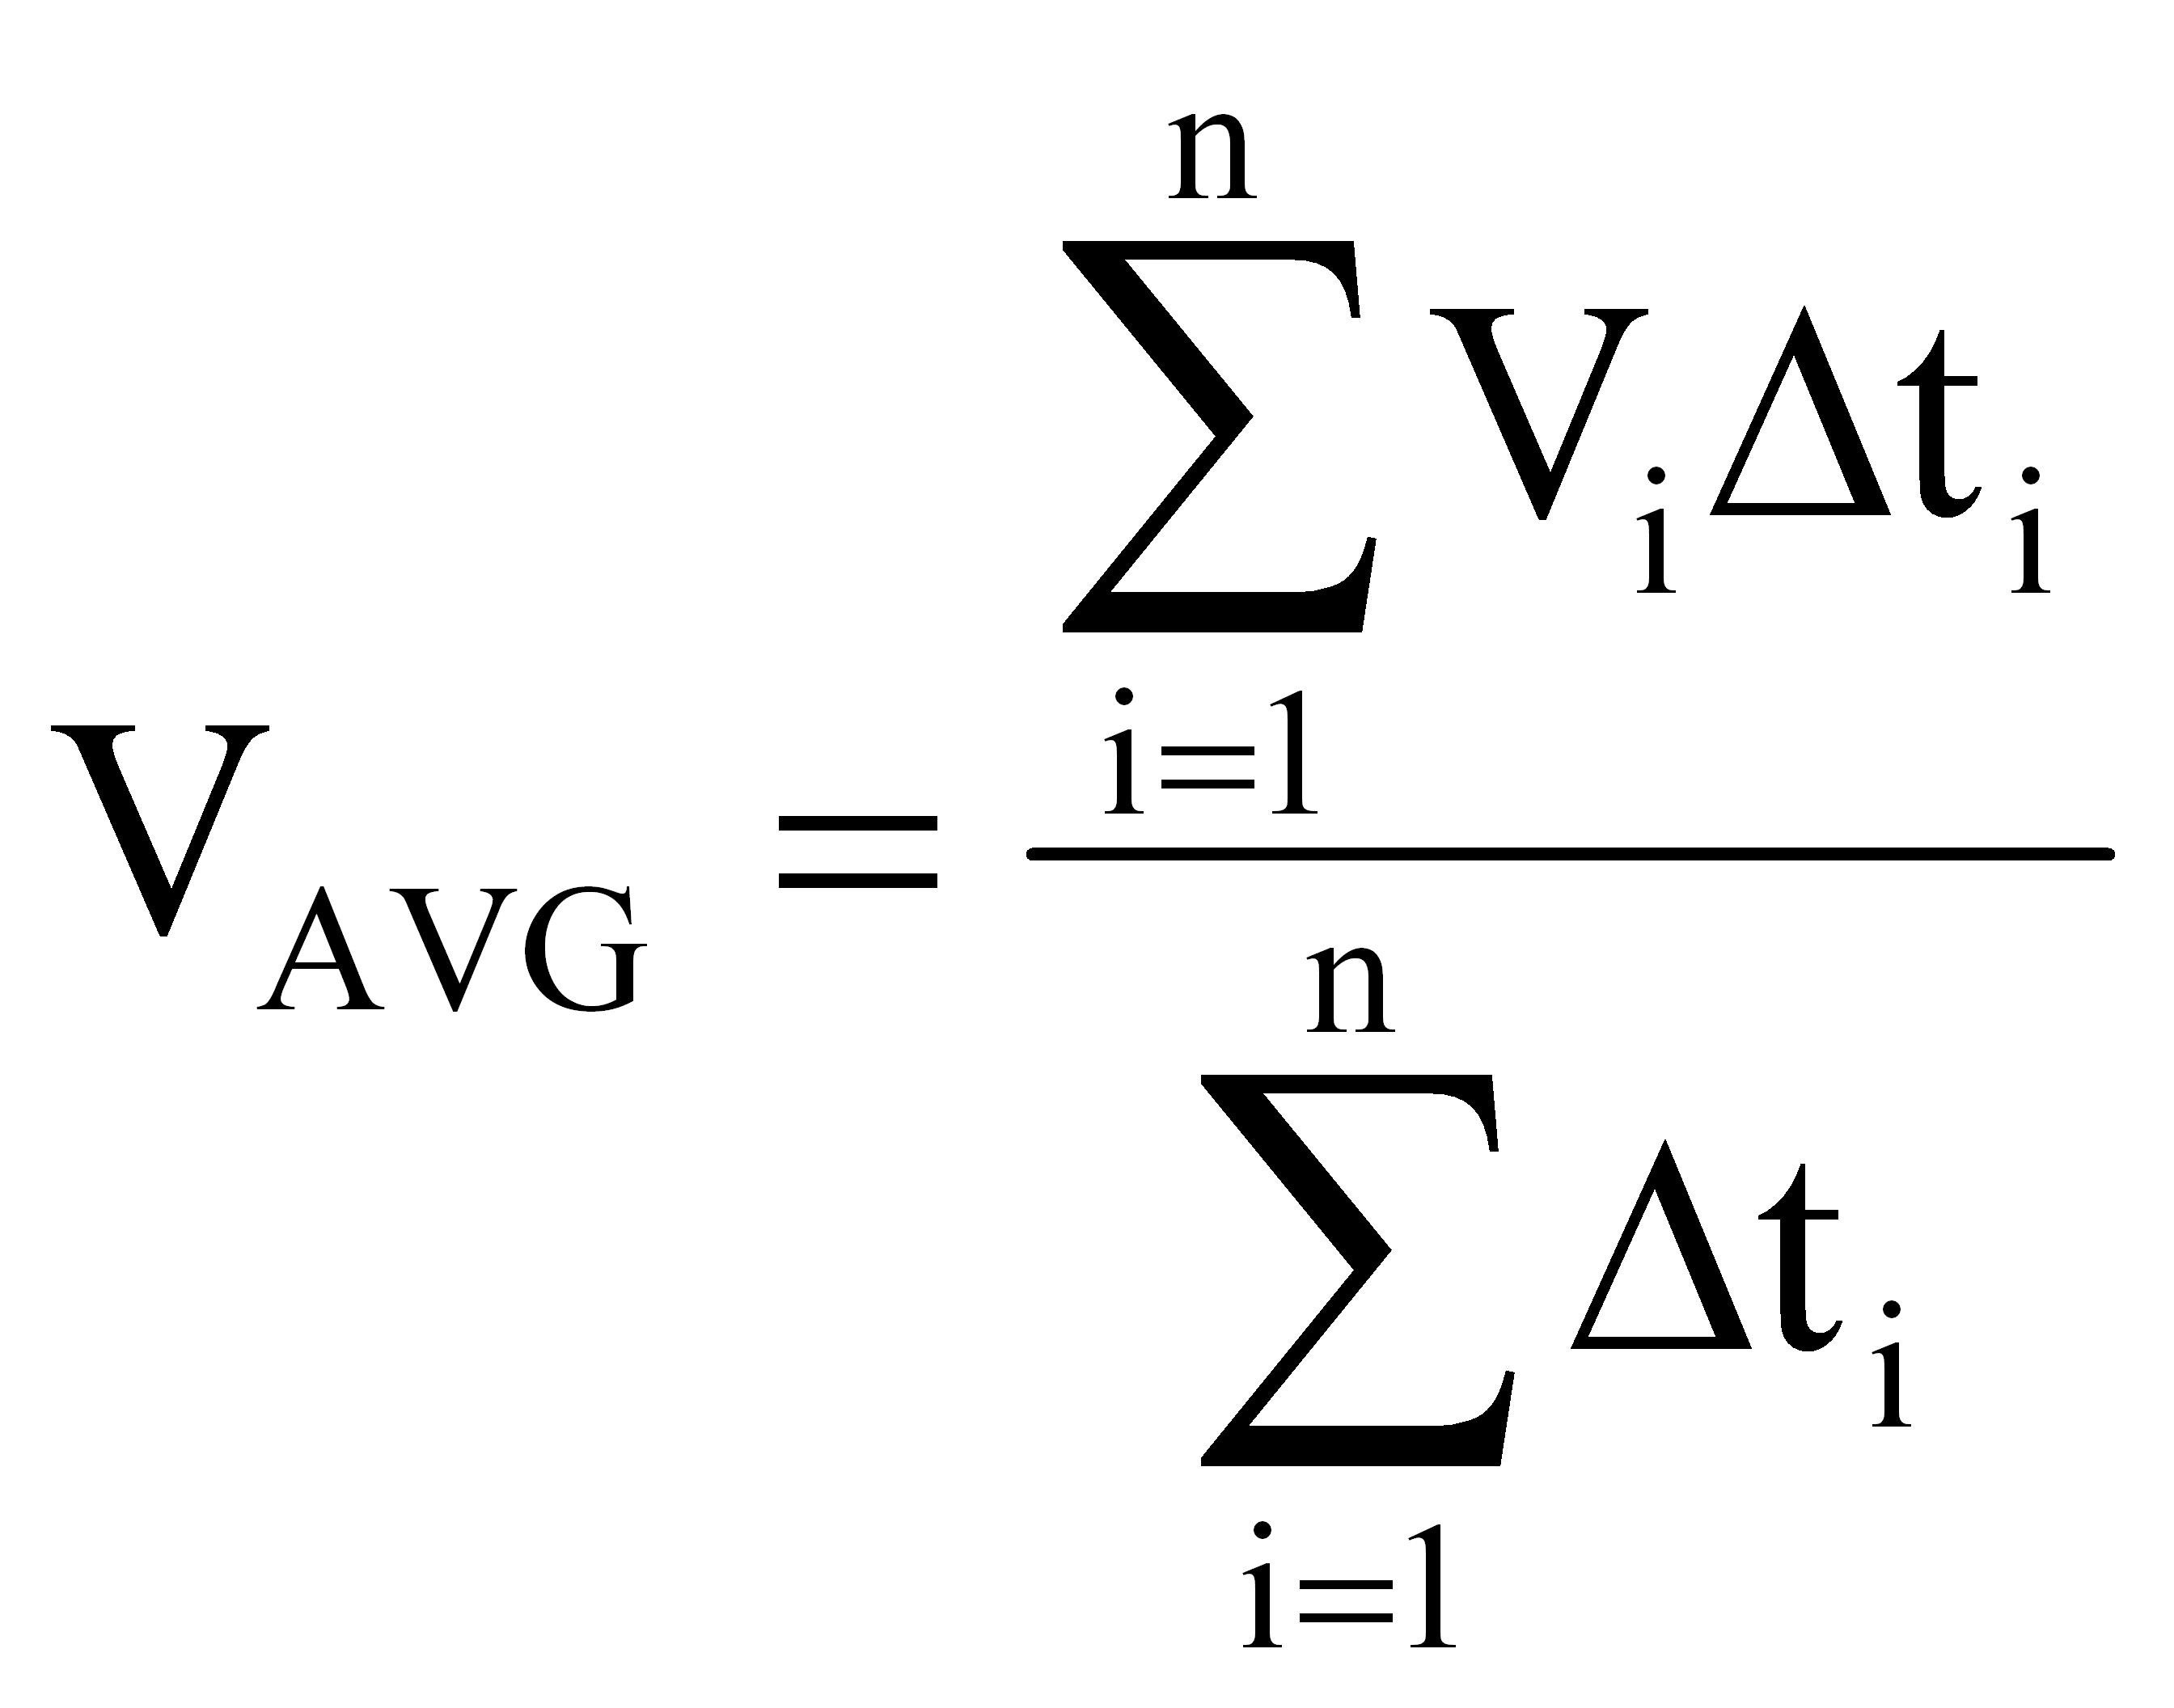 average velocity equation